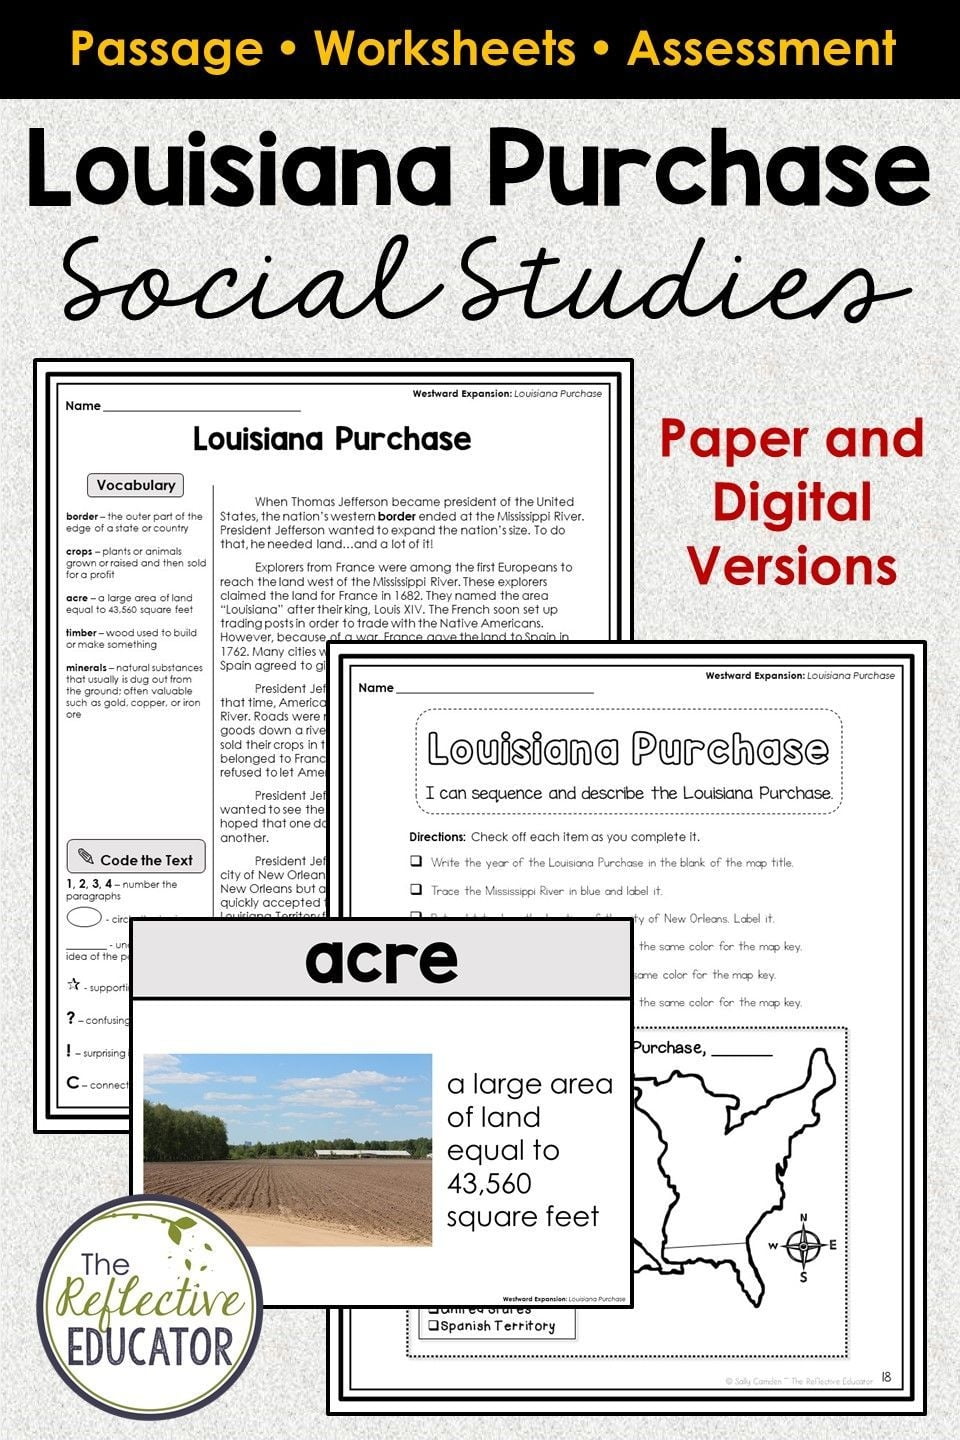 Louisiana Purchase Westward Expansion Social Studies For Google Classroom Social Studies Worksheets Social Studies Elementary Social Studies Lessons